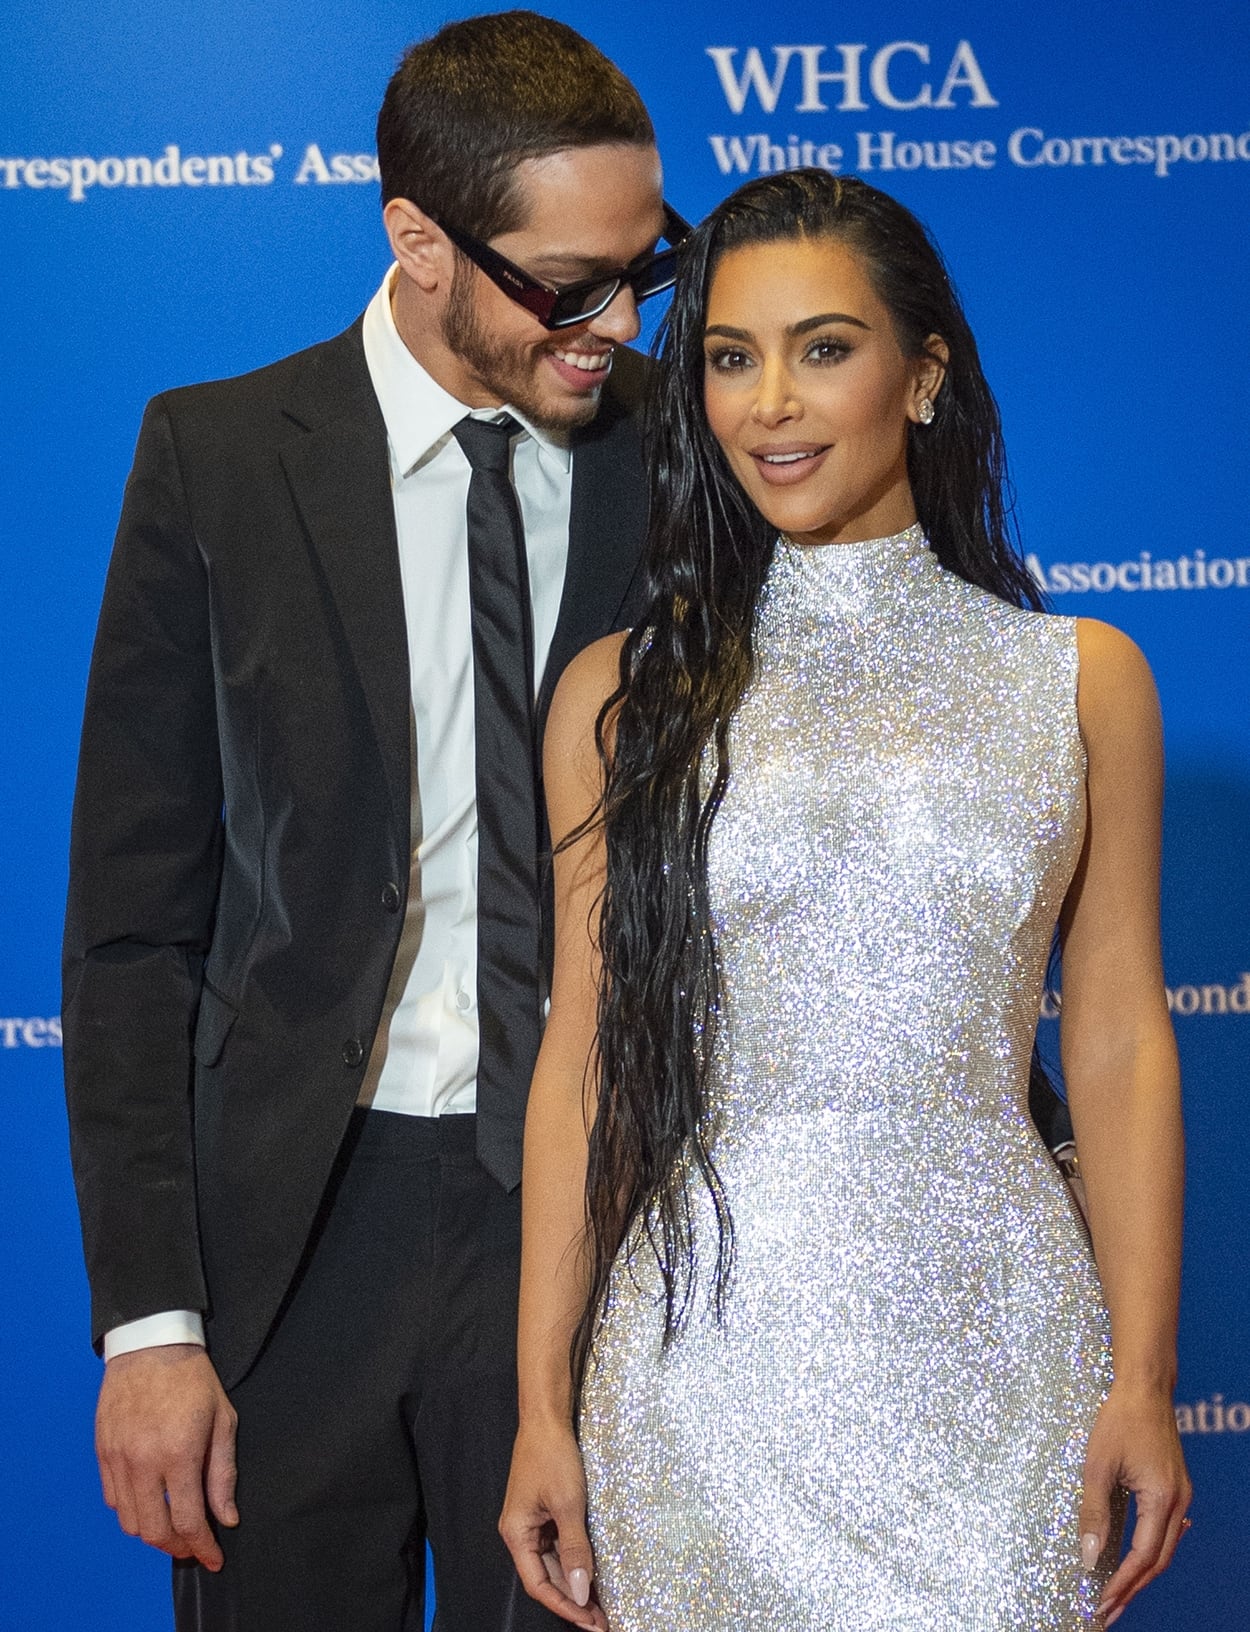 Kim Kardashian implies she and her boyfriend Pete Davidson are having great sex